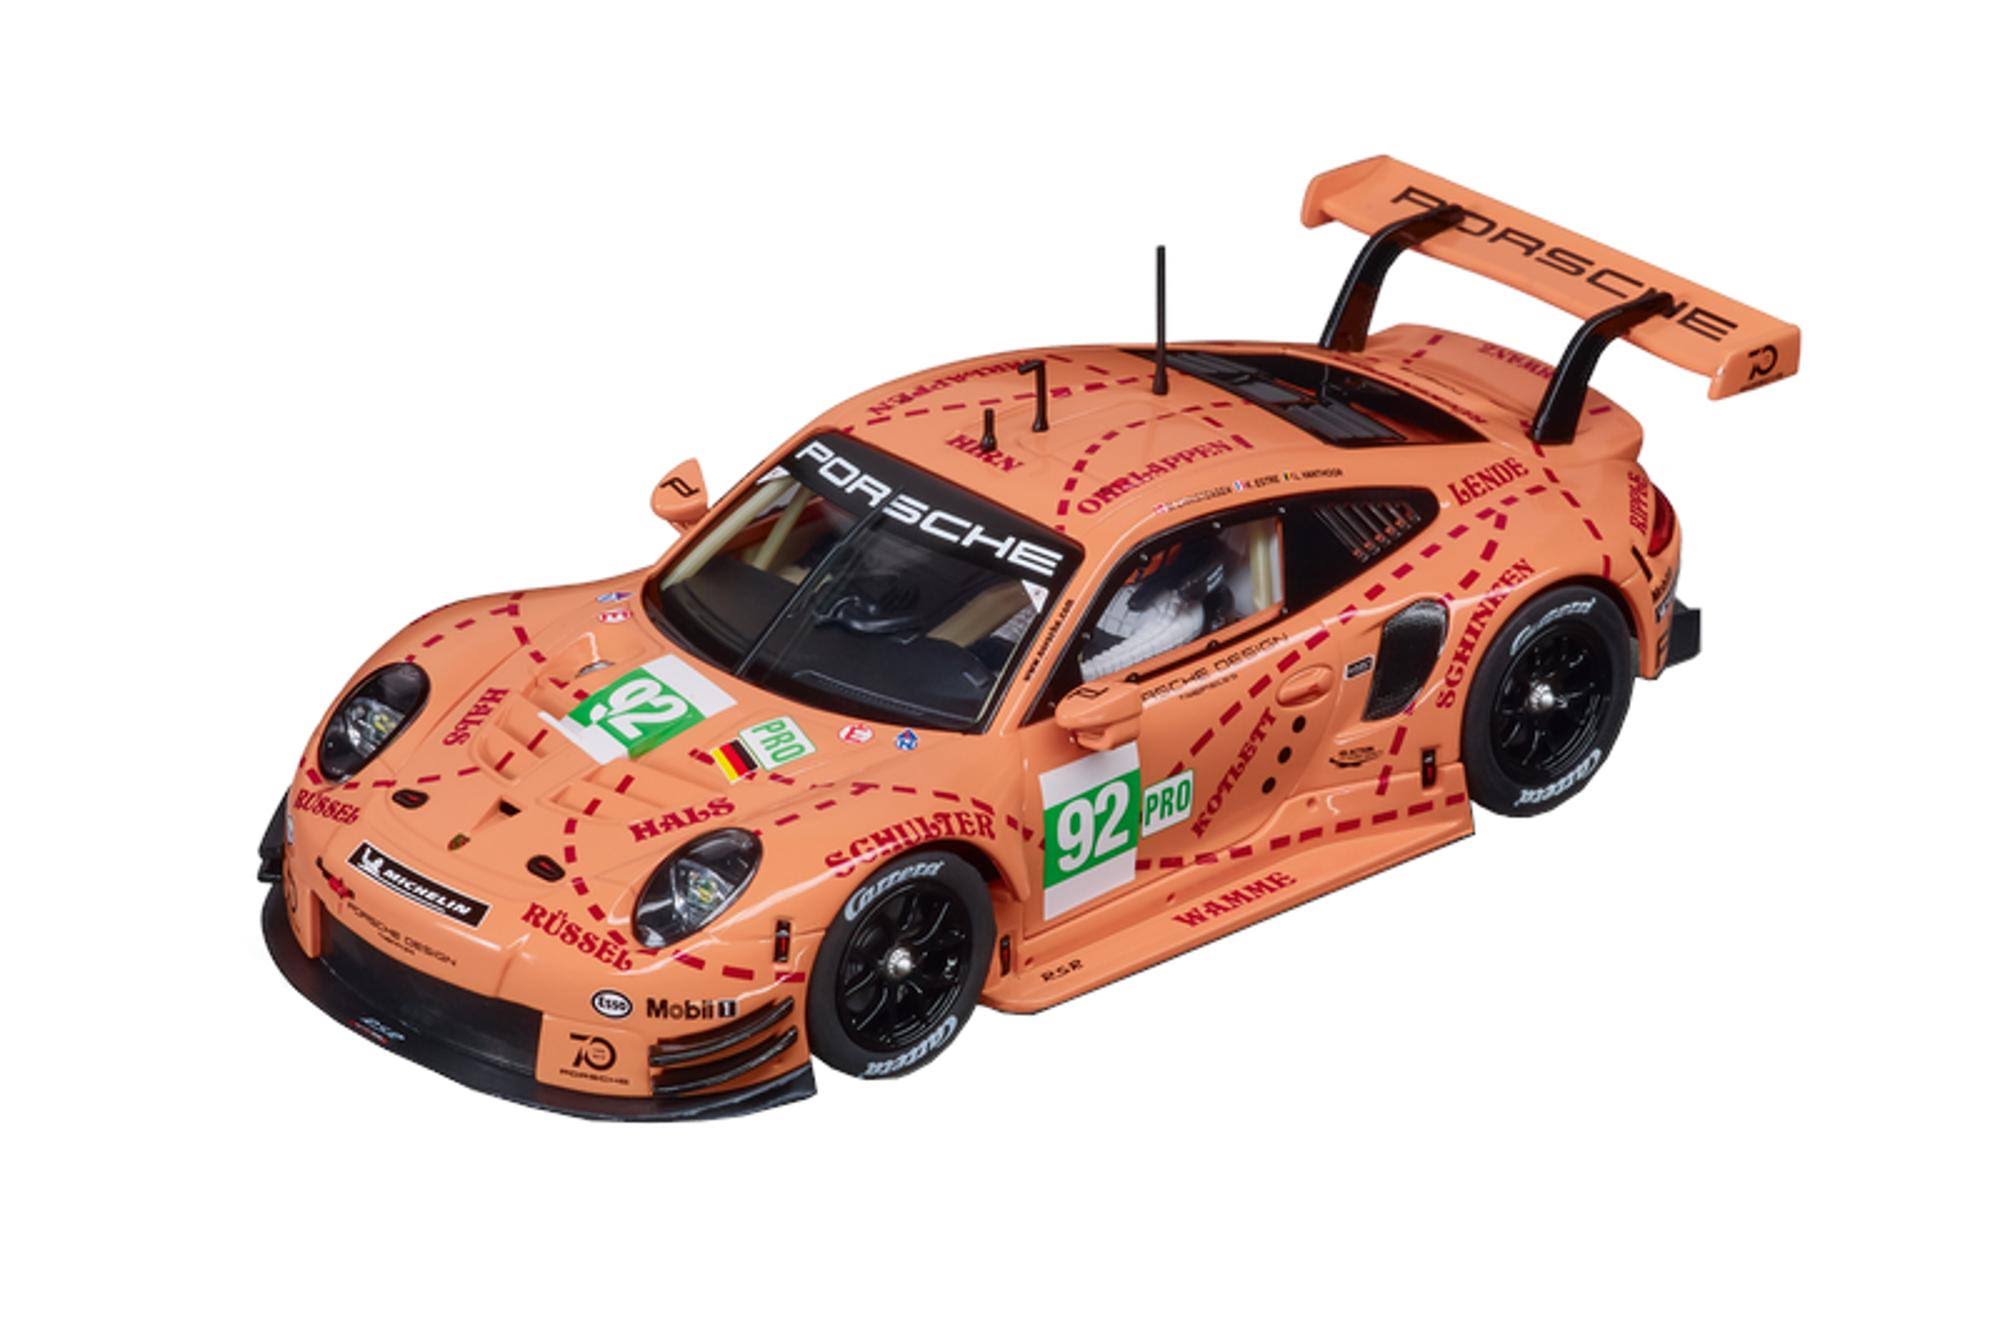 Carrera 27654 Porsche 911 RSR Pink Pig Design No 92 1 32 Scale Analog Slot Car Racing Vehicle For Carrera Evolution Slot Car Race Tracks